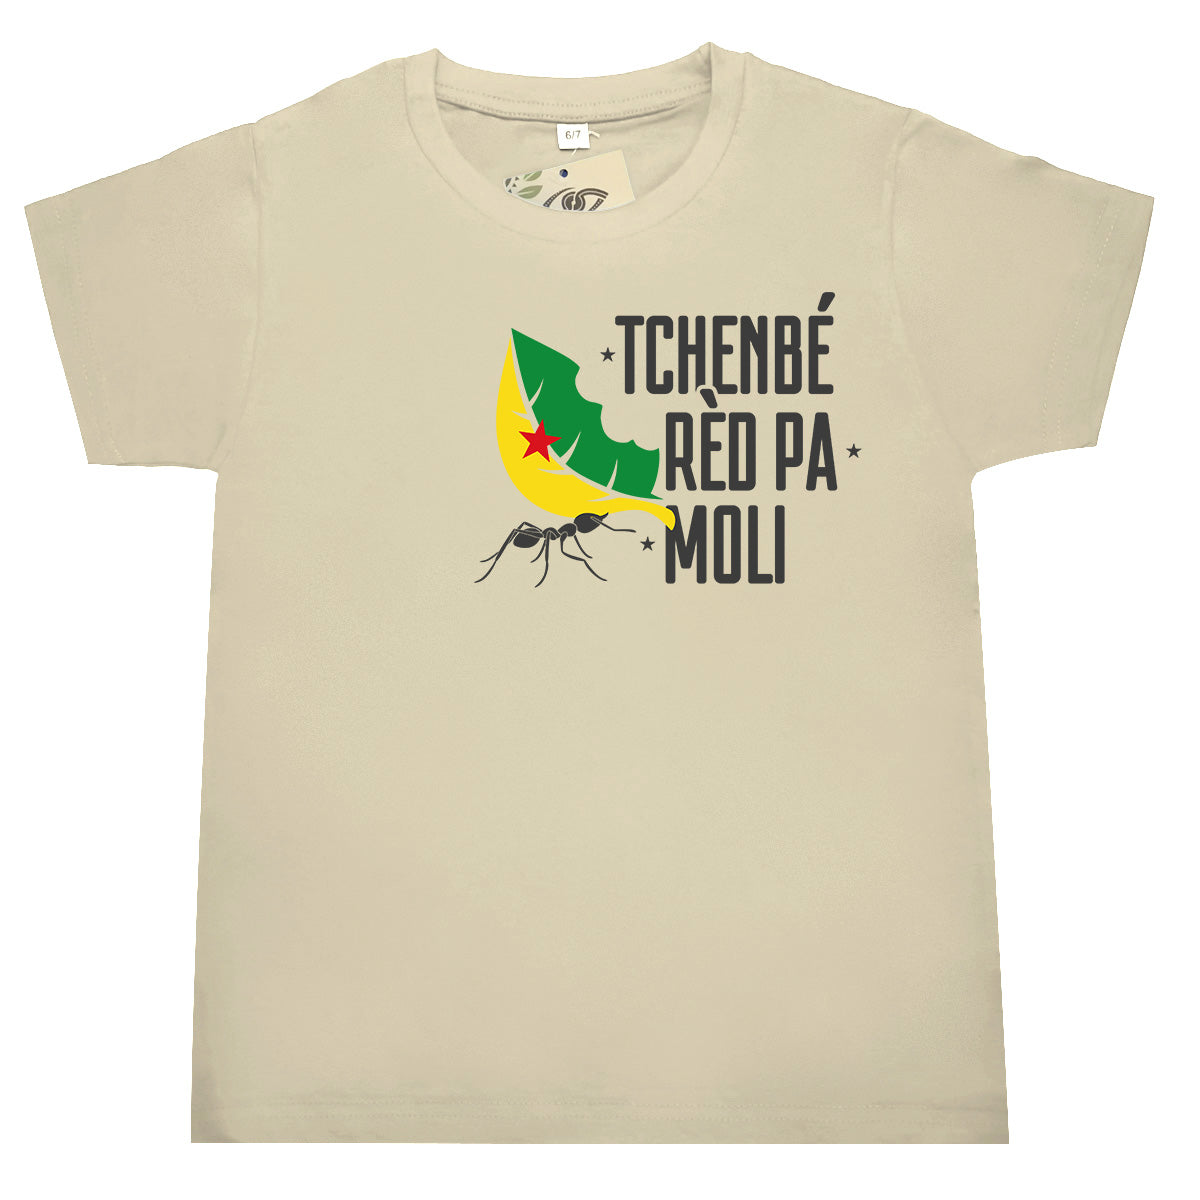 bat wey - T-shirt enfant - Tchenbe red fourmi - Guyane - Sable